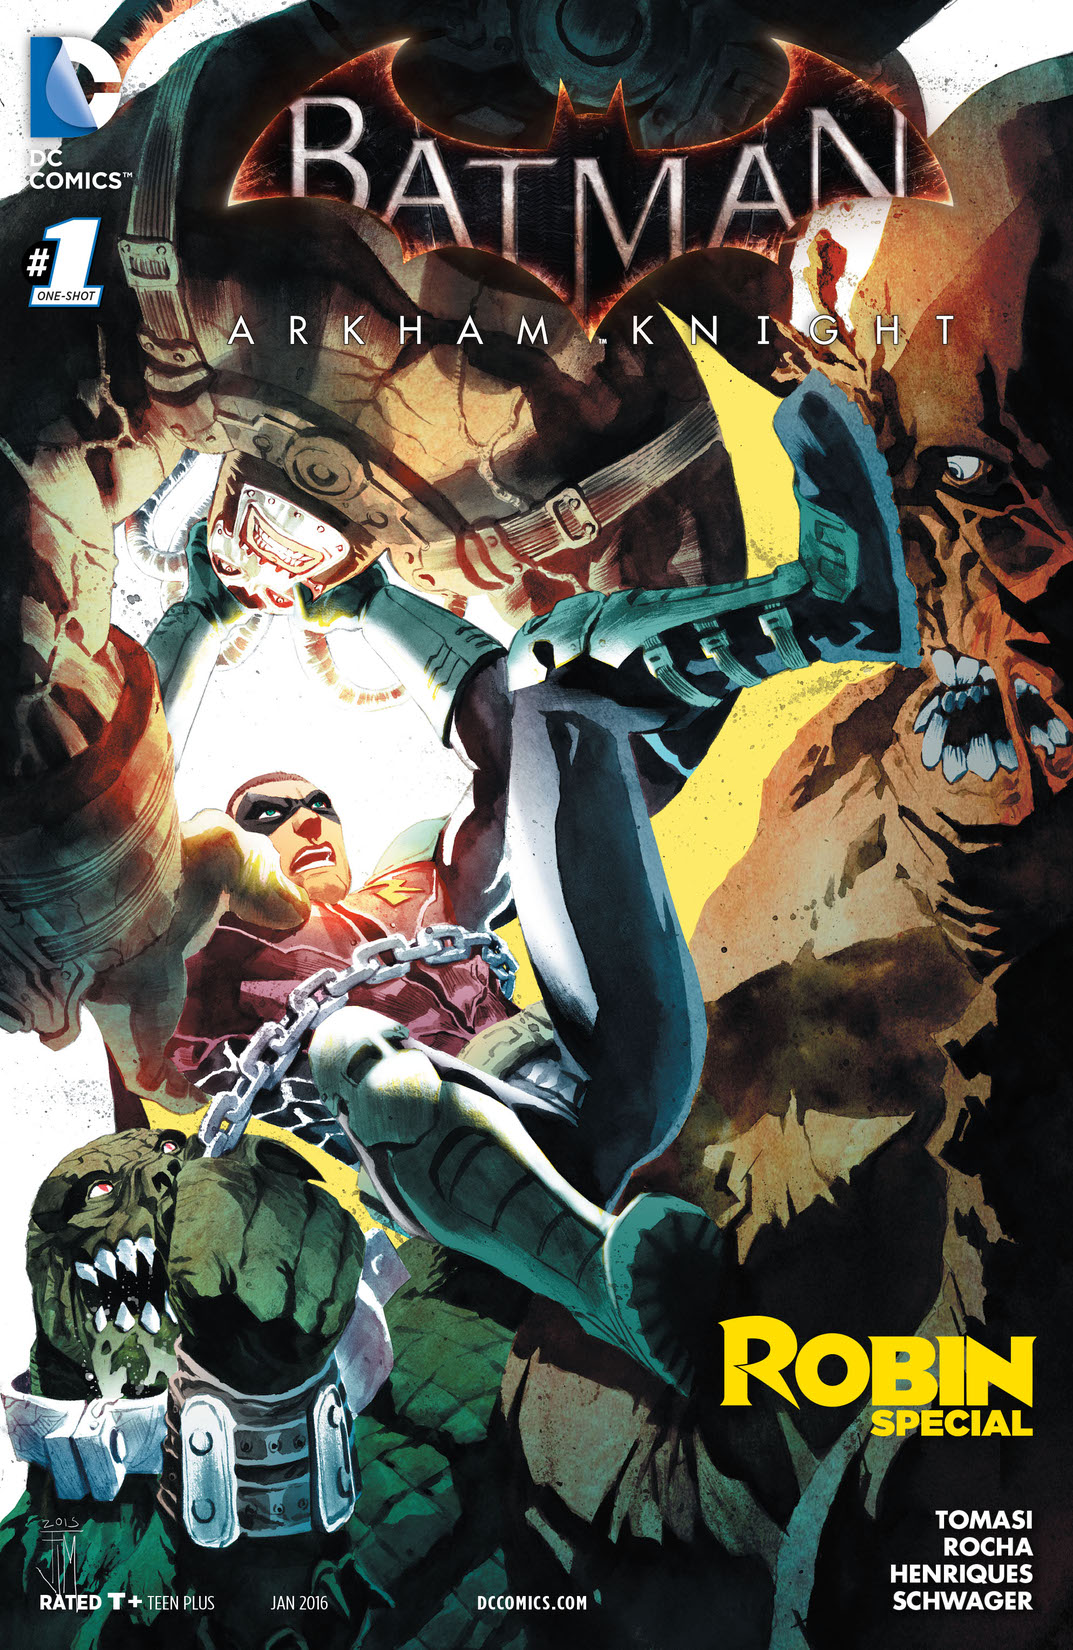 Batman: Arkham Knight: Robin #1 preview images